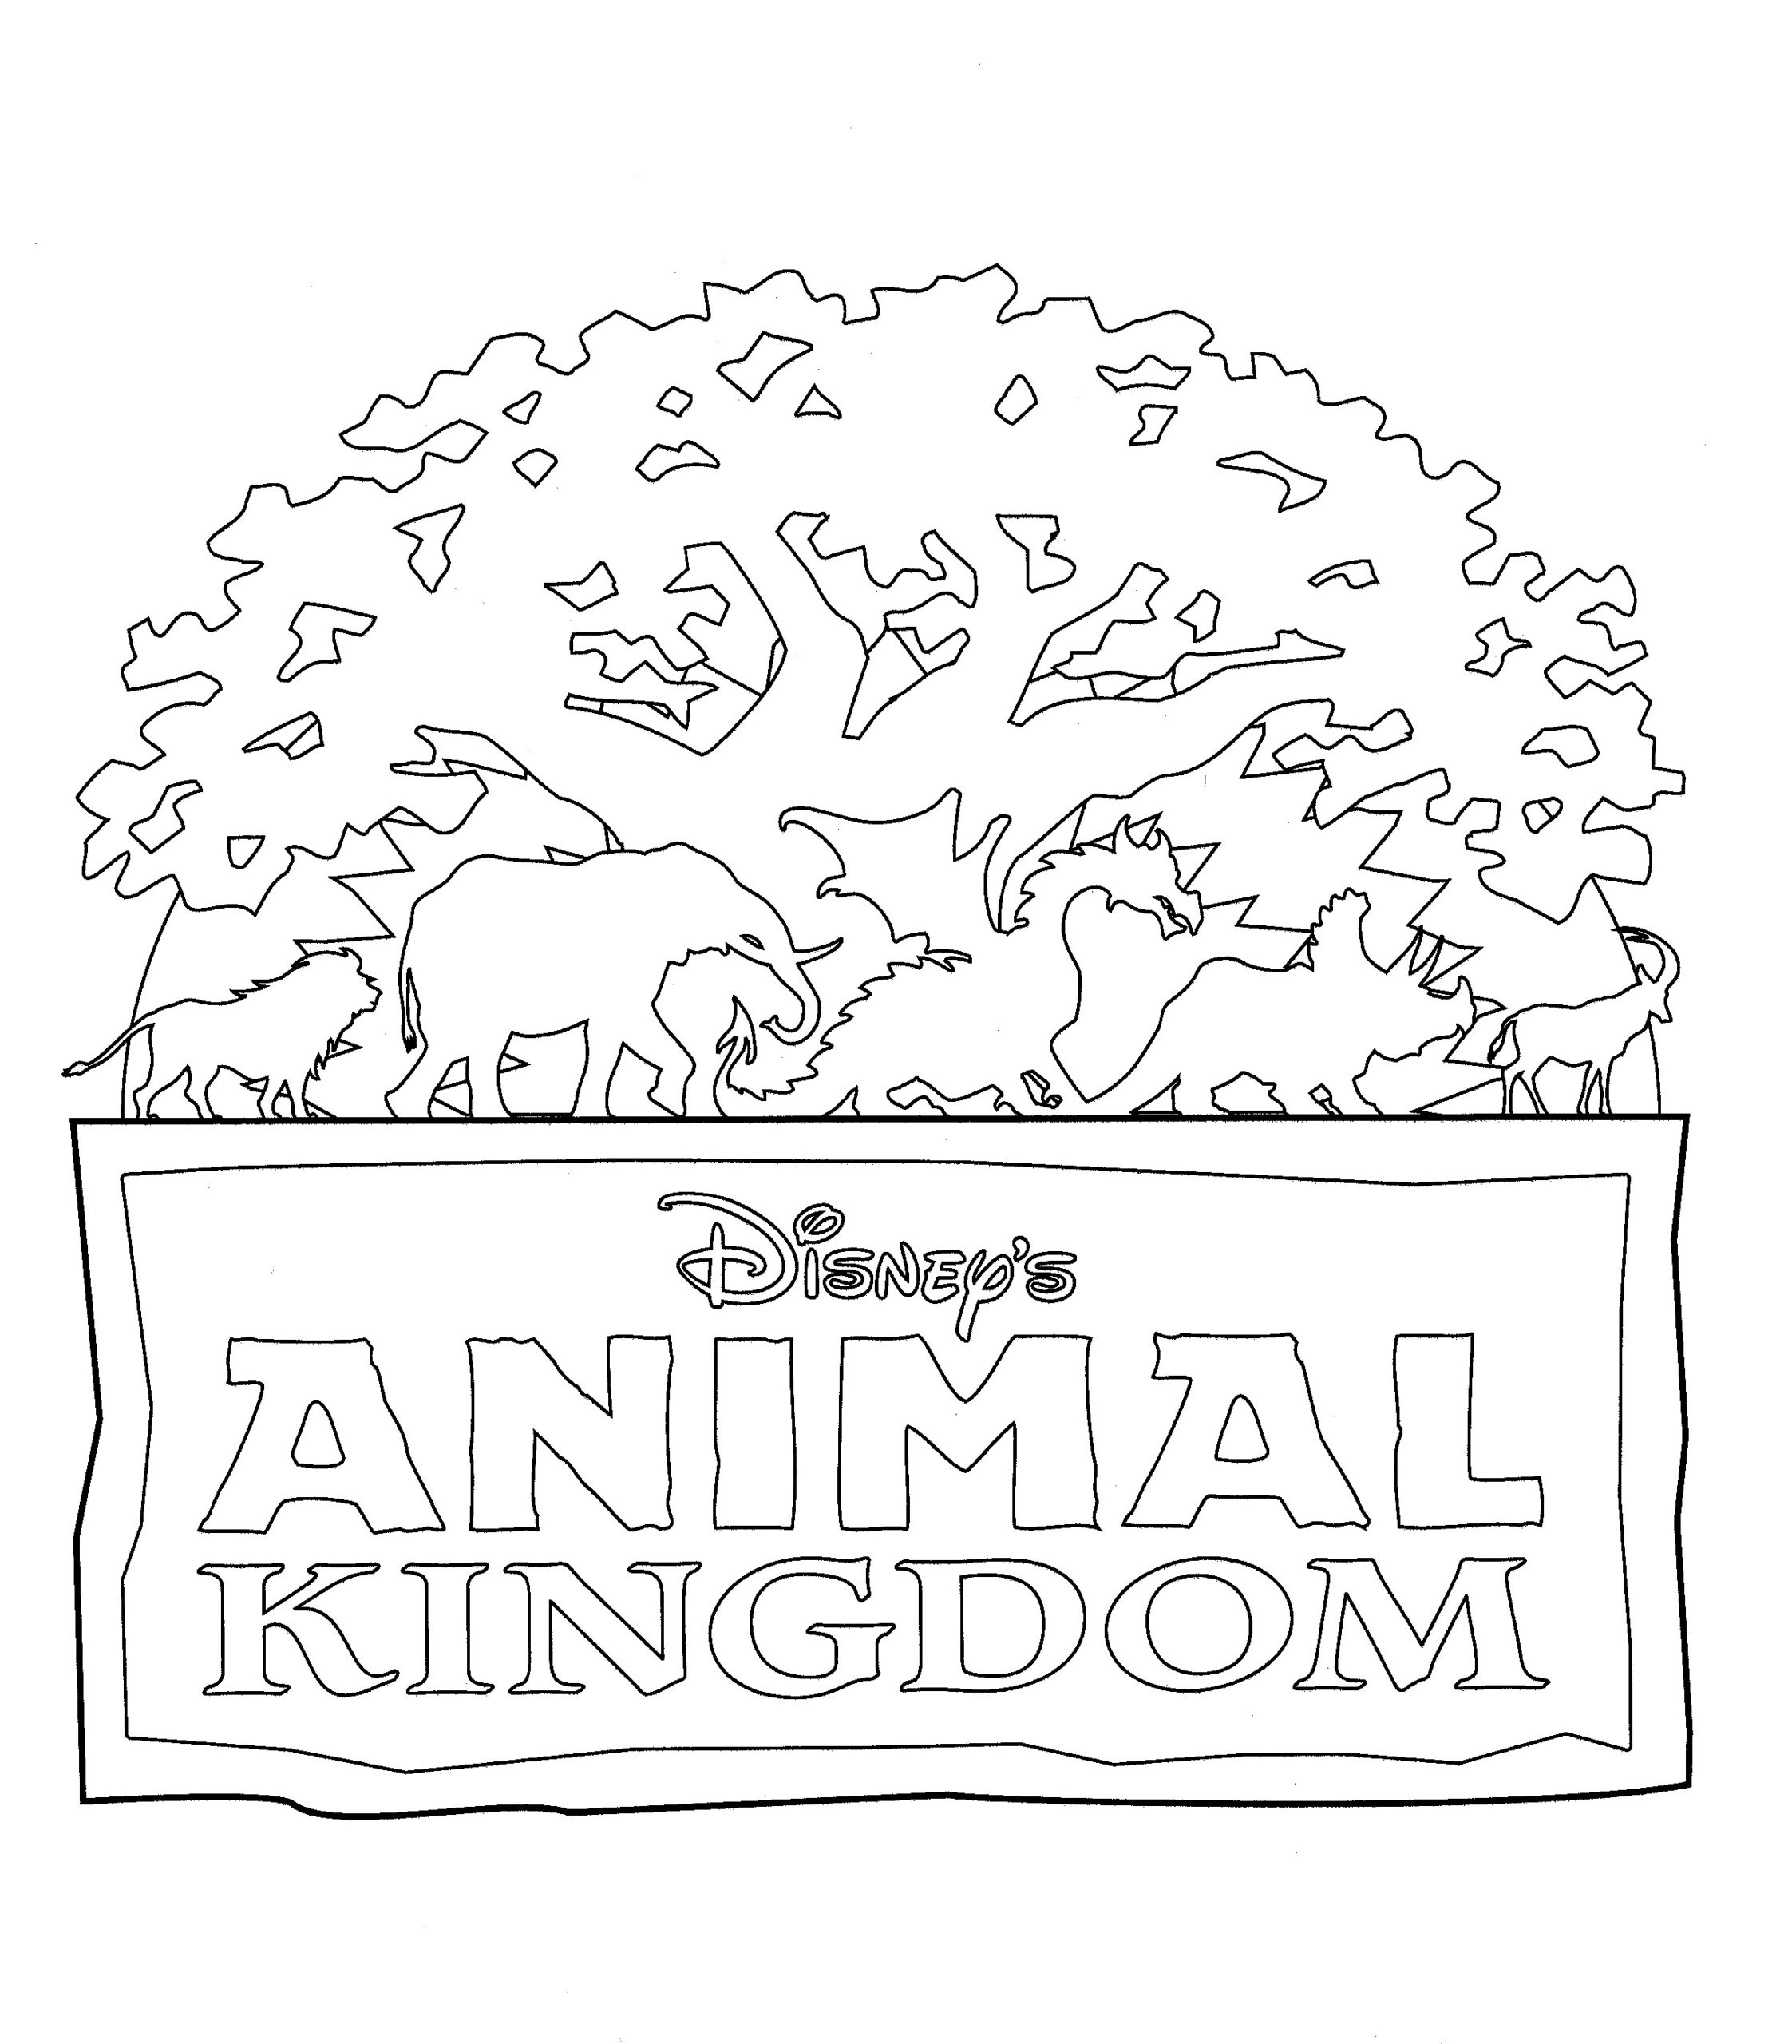 Disney coloring pages â animal kingdom logo â the disney nerds podcast